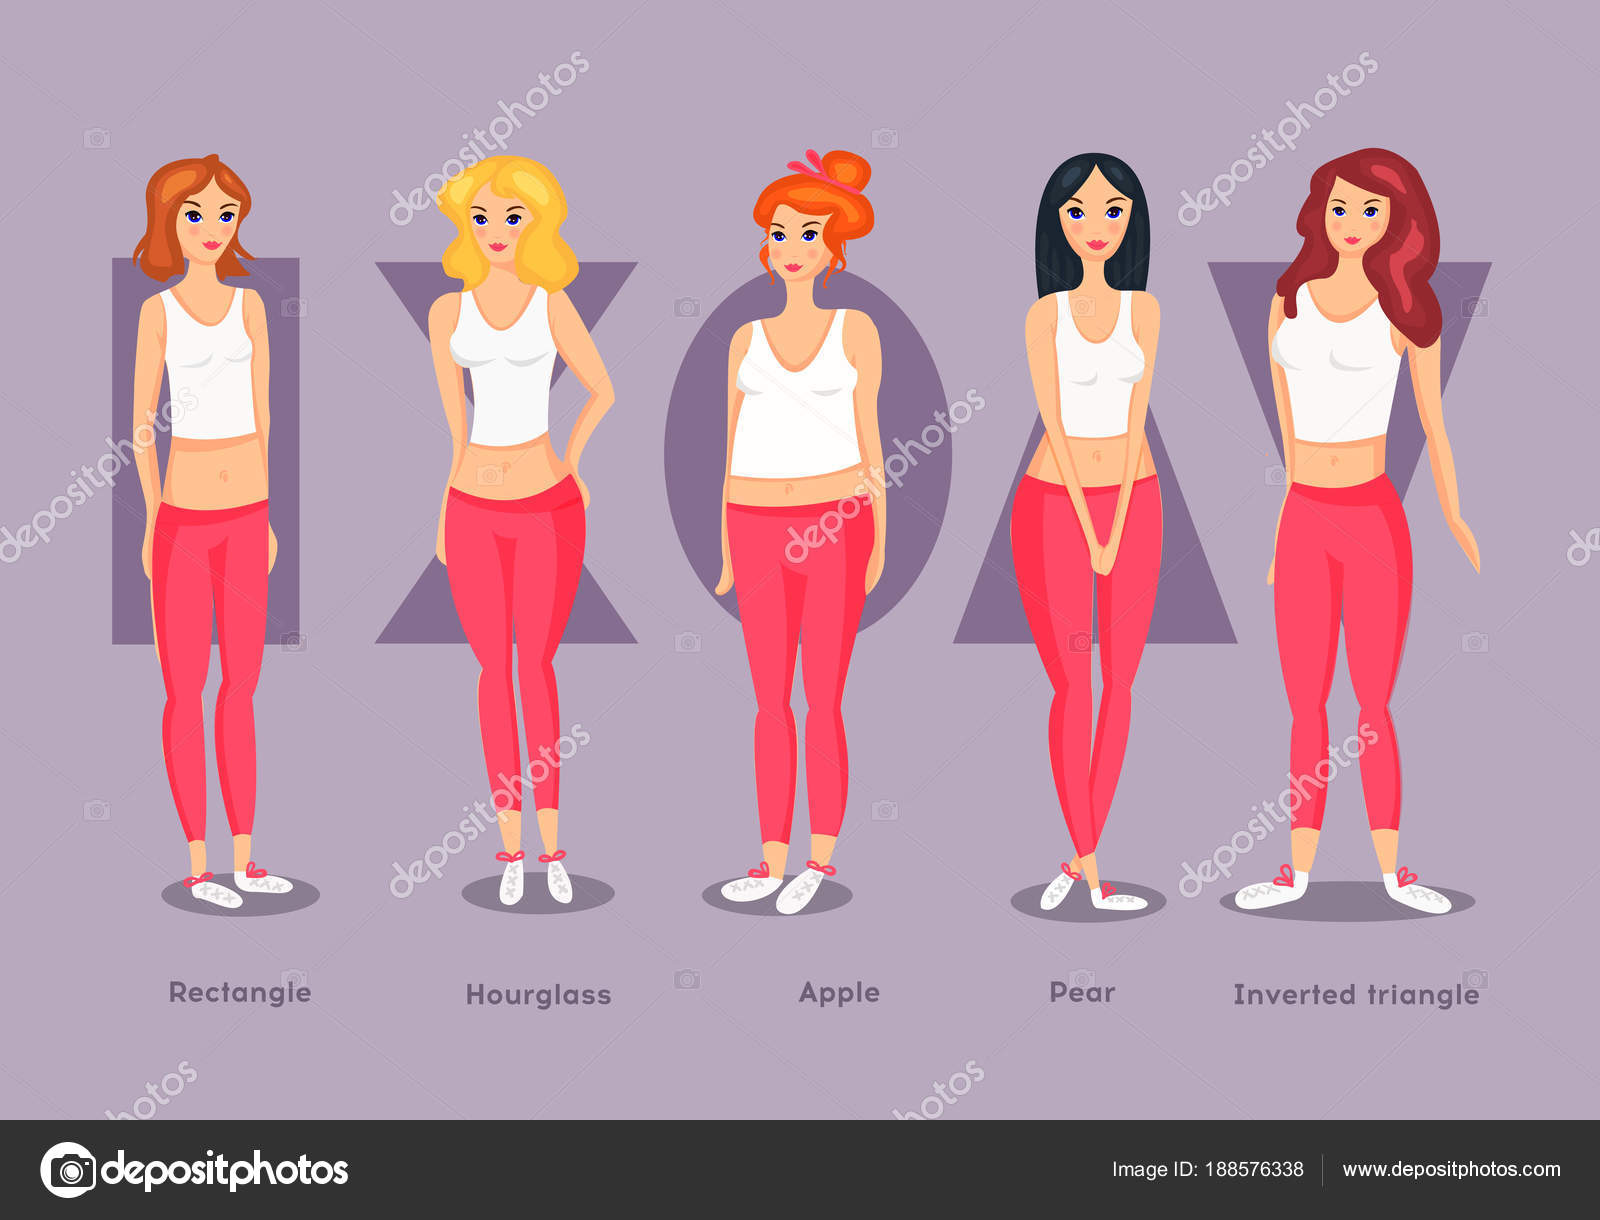 Female Body Shapes Chart